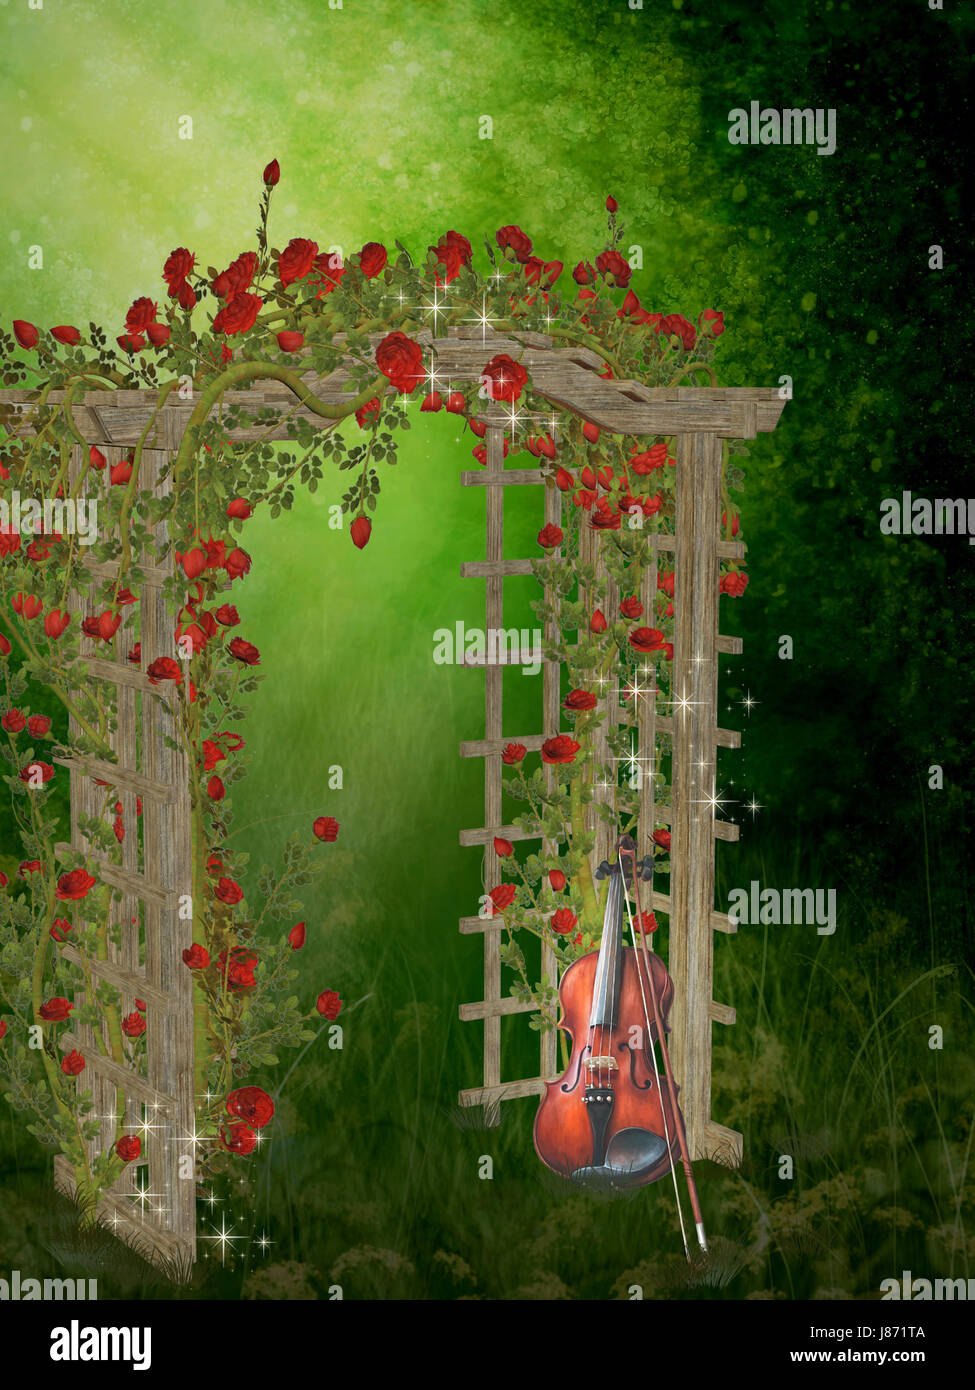 music, musical instrument, garden, flower, rose, plant, butterfly, dreamy, Stock Photo